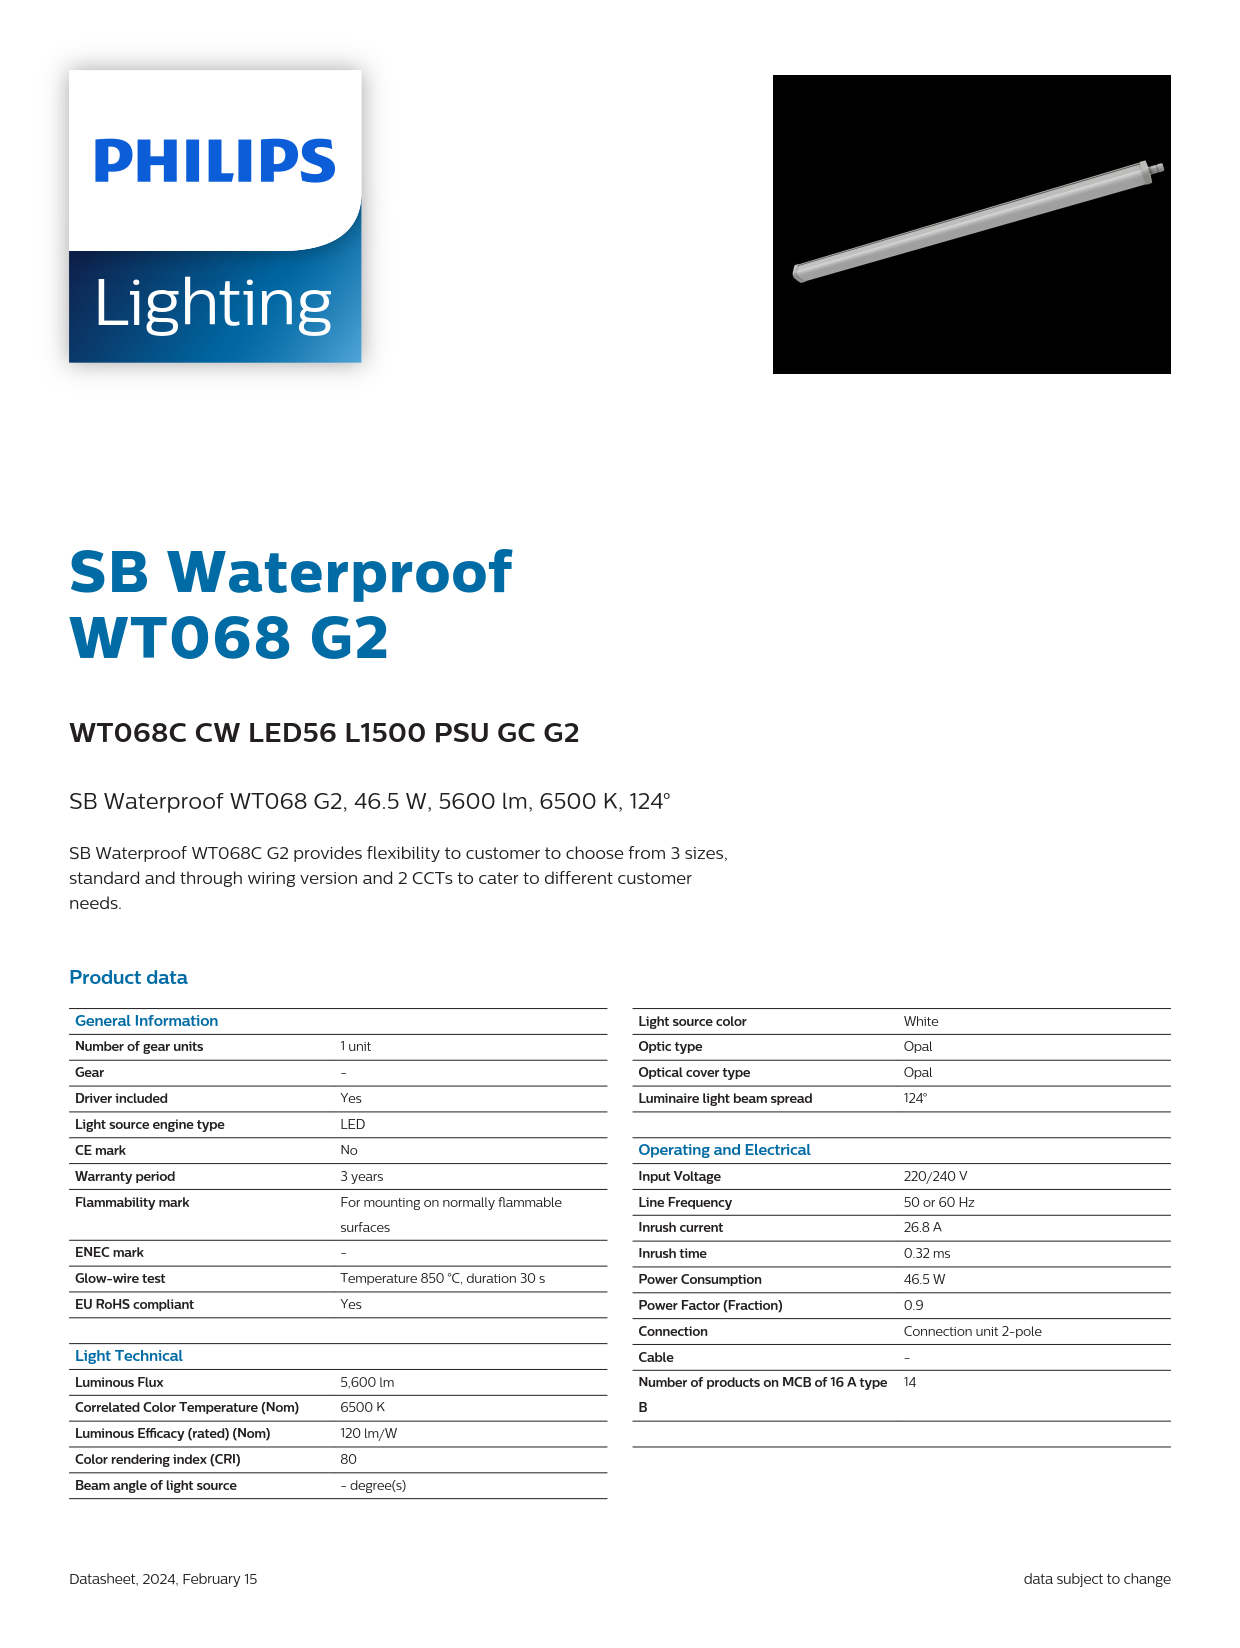 PHILIPS Waterproof Fixture light WT068C CW LED56 L1500 PSU GC G2 911401861685